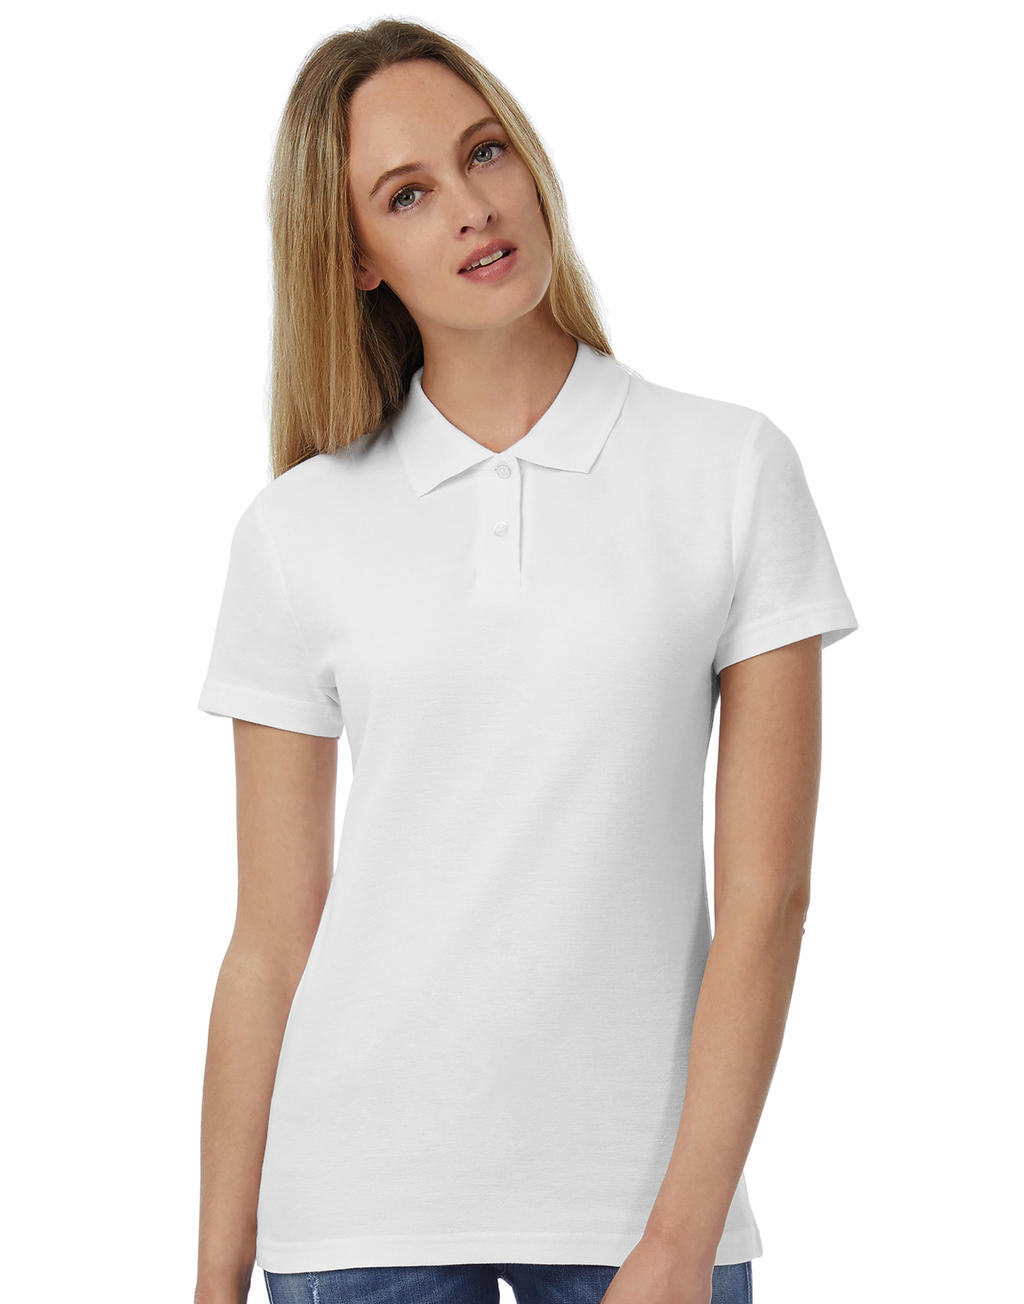 B&C PWI11 Damen Piqué Polo Shirt günstig kaufen | Basic-Shirts